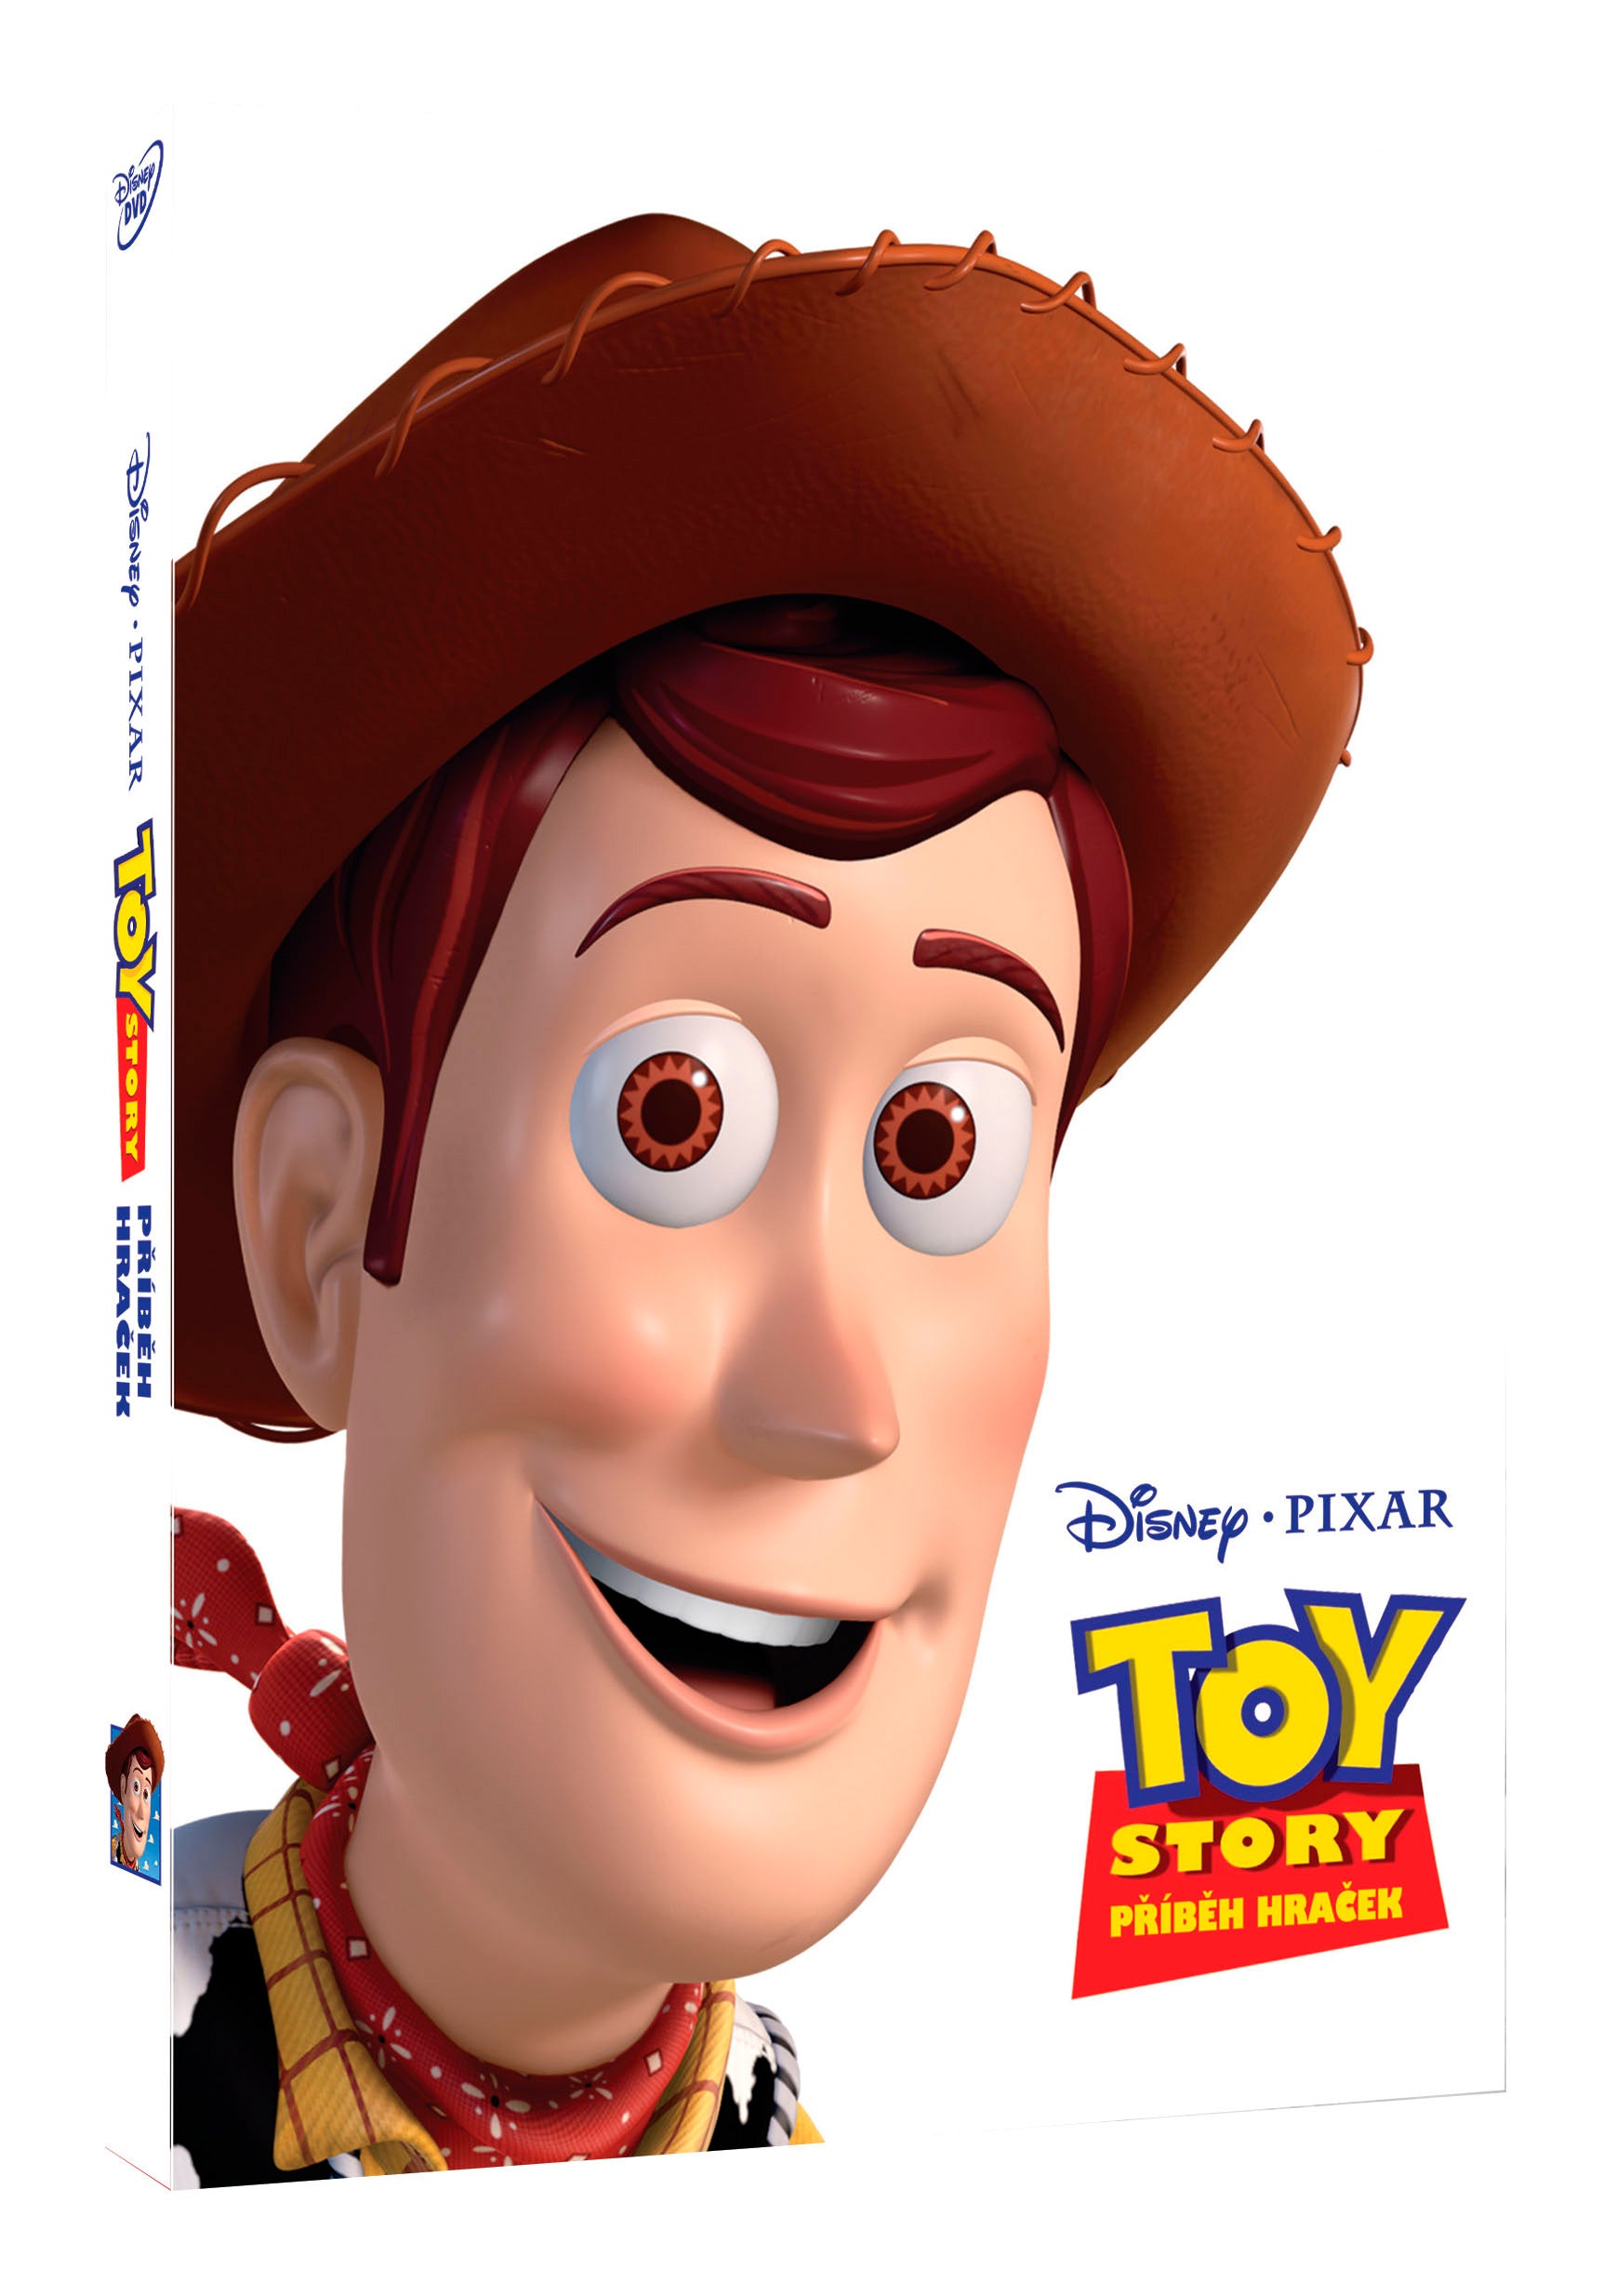 Toy Story: Pribeh hracek S.E. - Disney Pixar edice (Toy Story Special Edition)